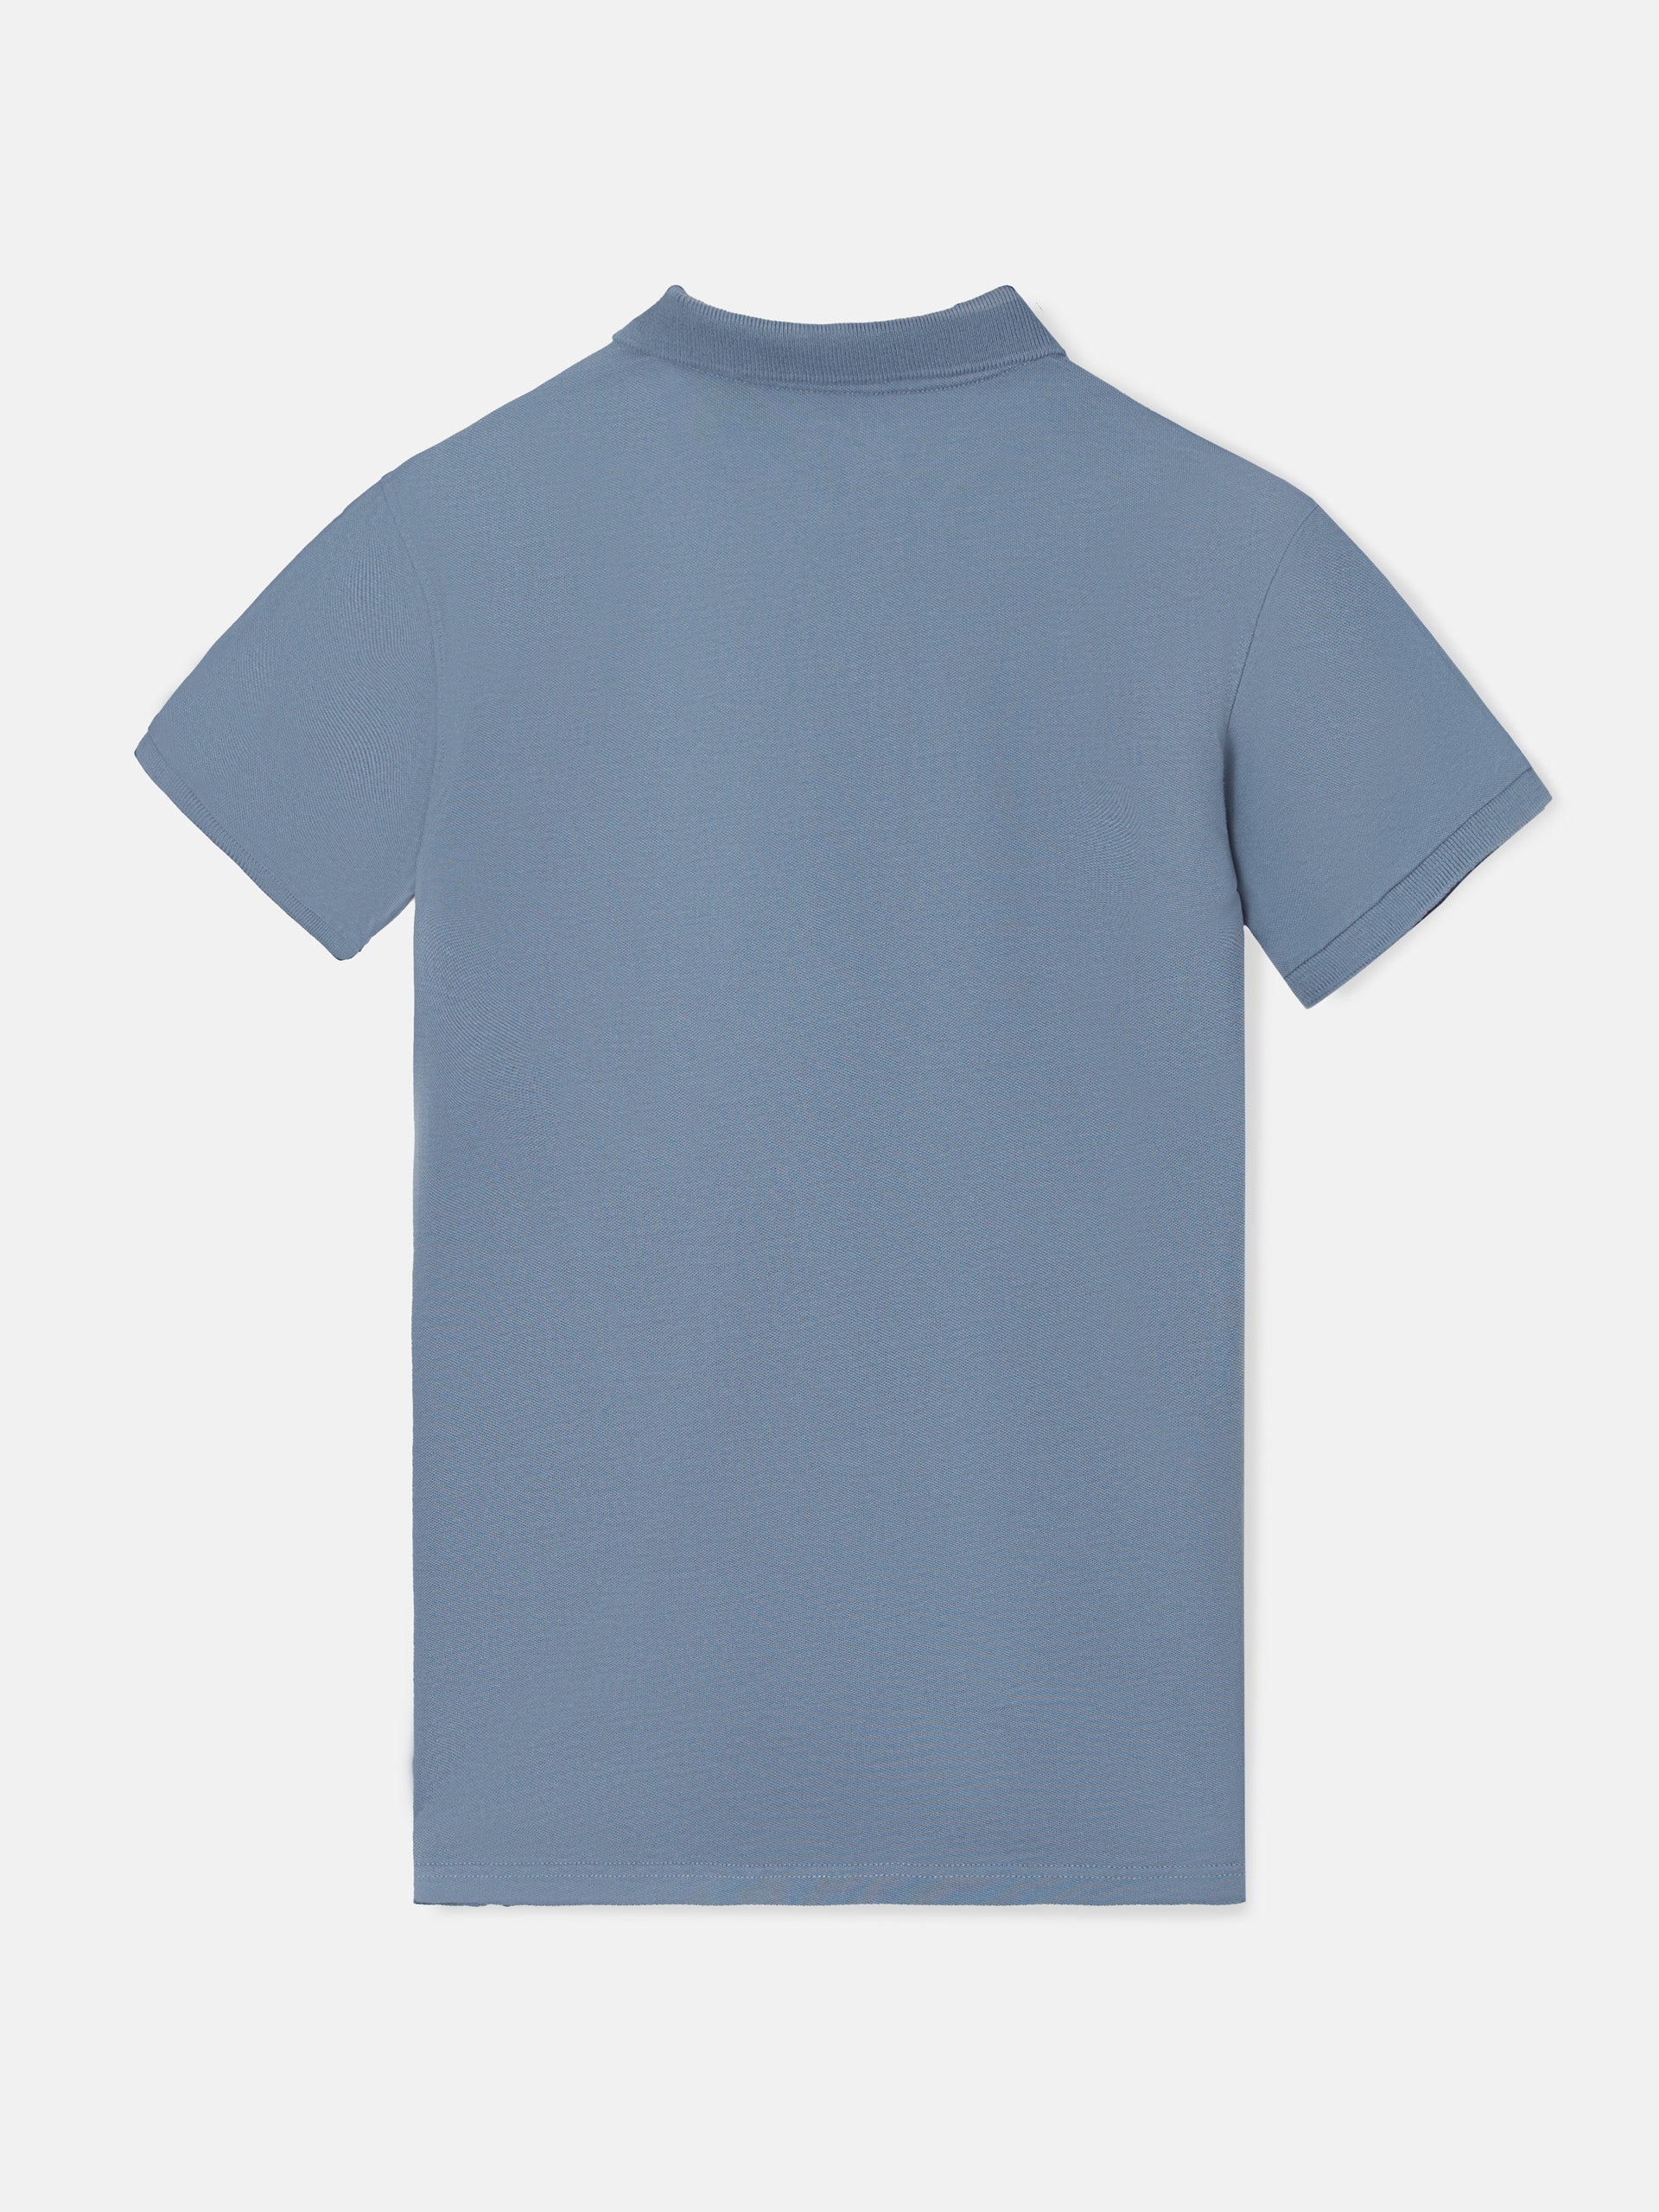 Classic plain medium blue polo shirt